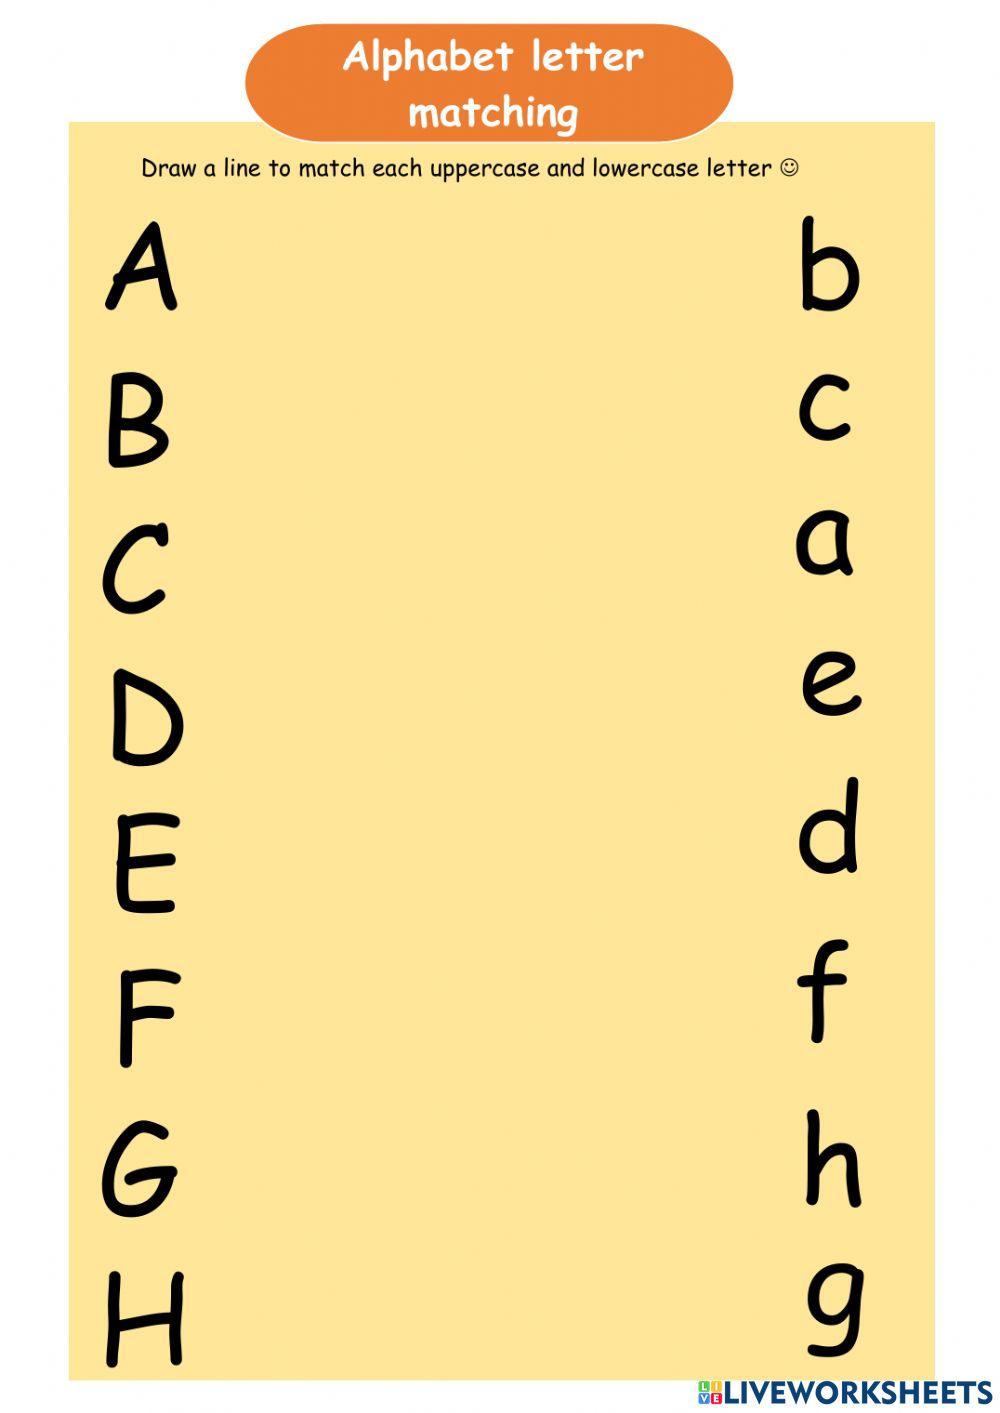 Alphabet letter matching